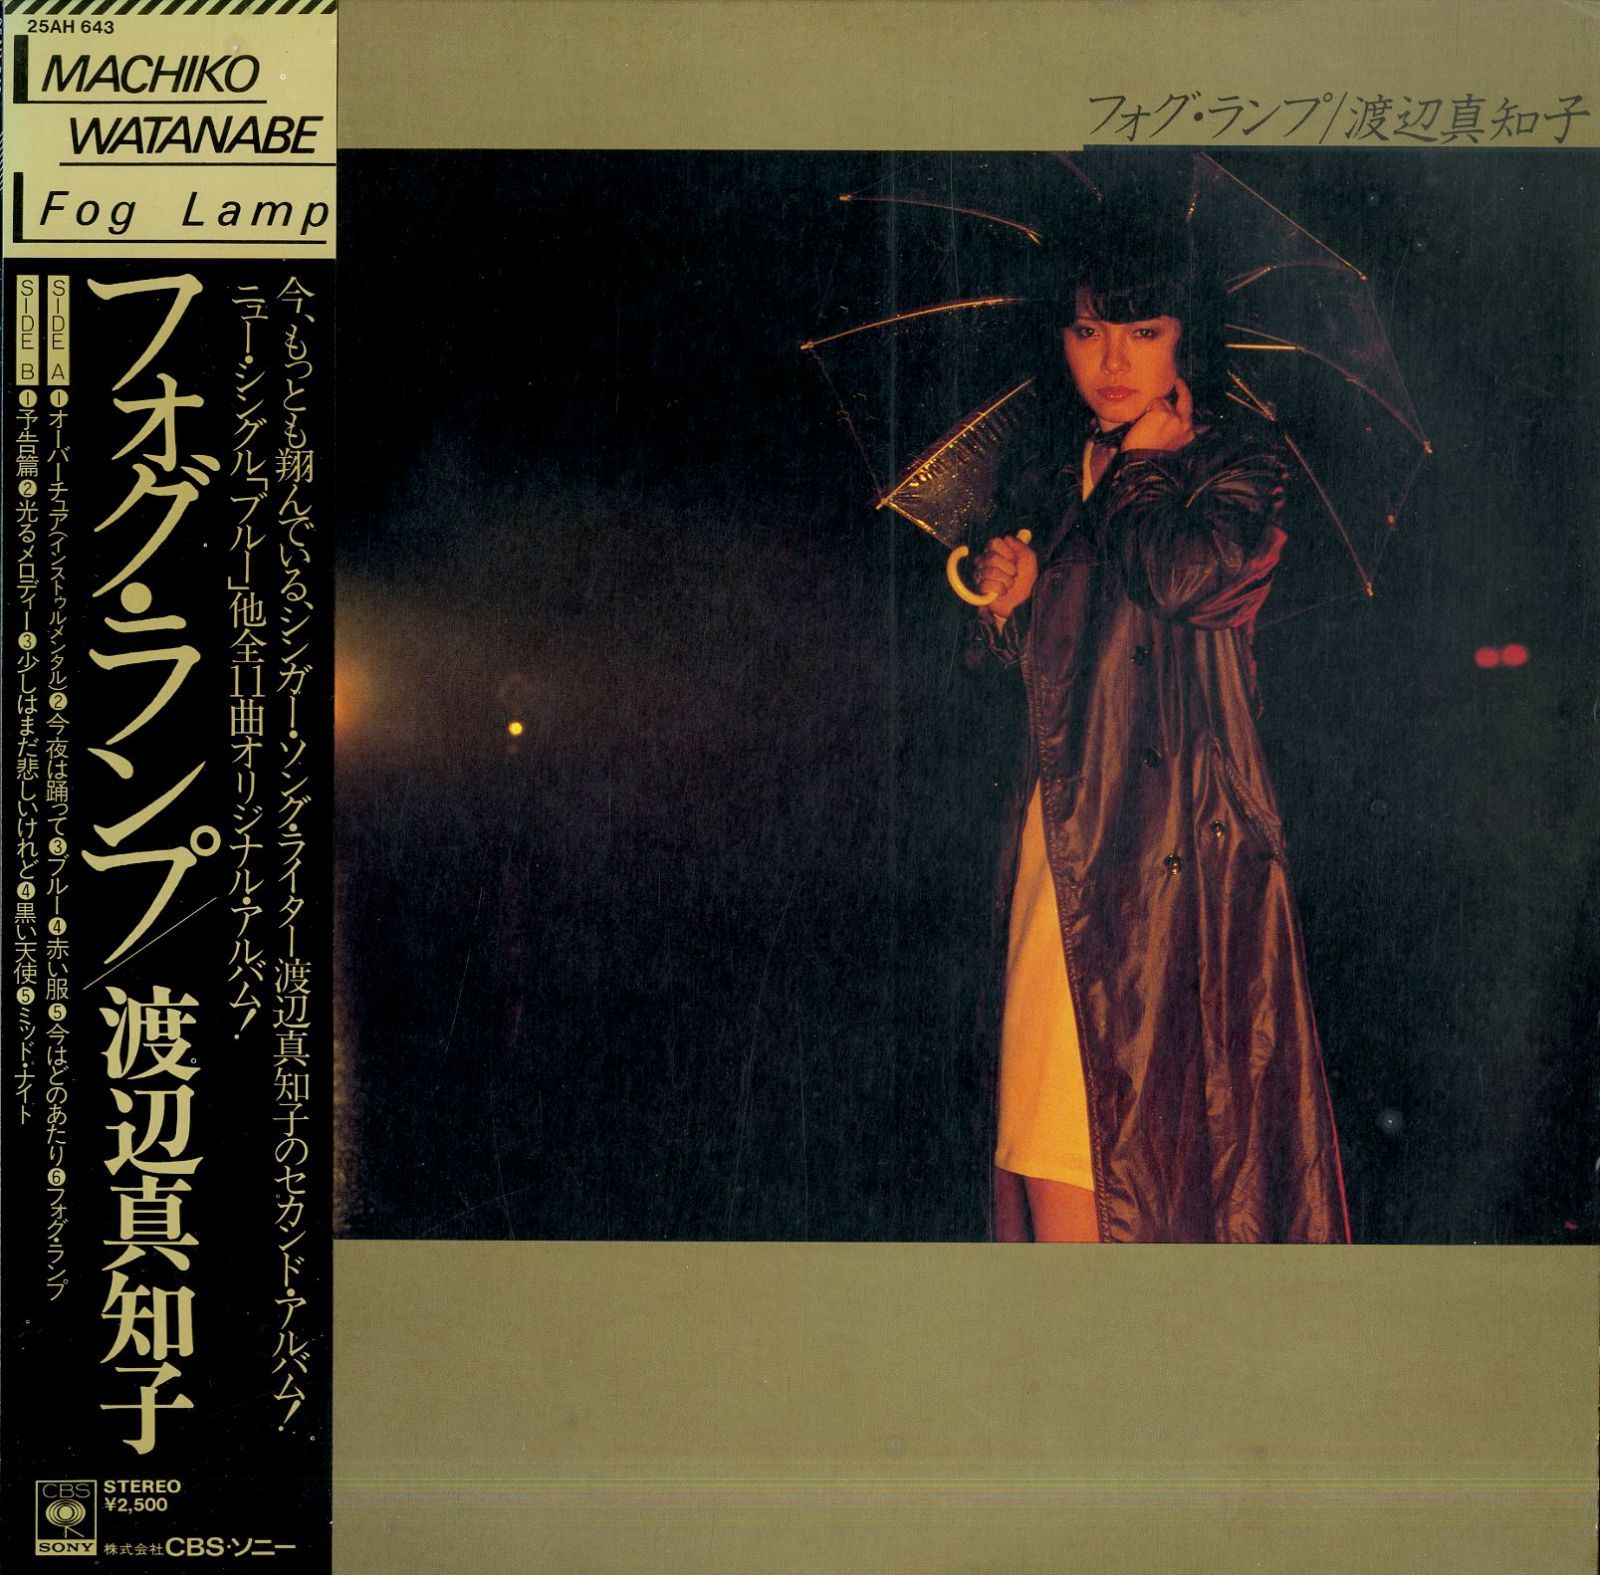 LP1枚 / 渡辺真知子 / Fog Lamp (1978年・25AH-643・ディスコ・DISCO) / A00585136 - メルカリ